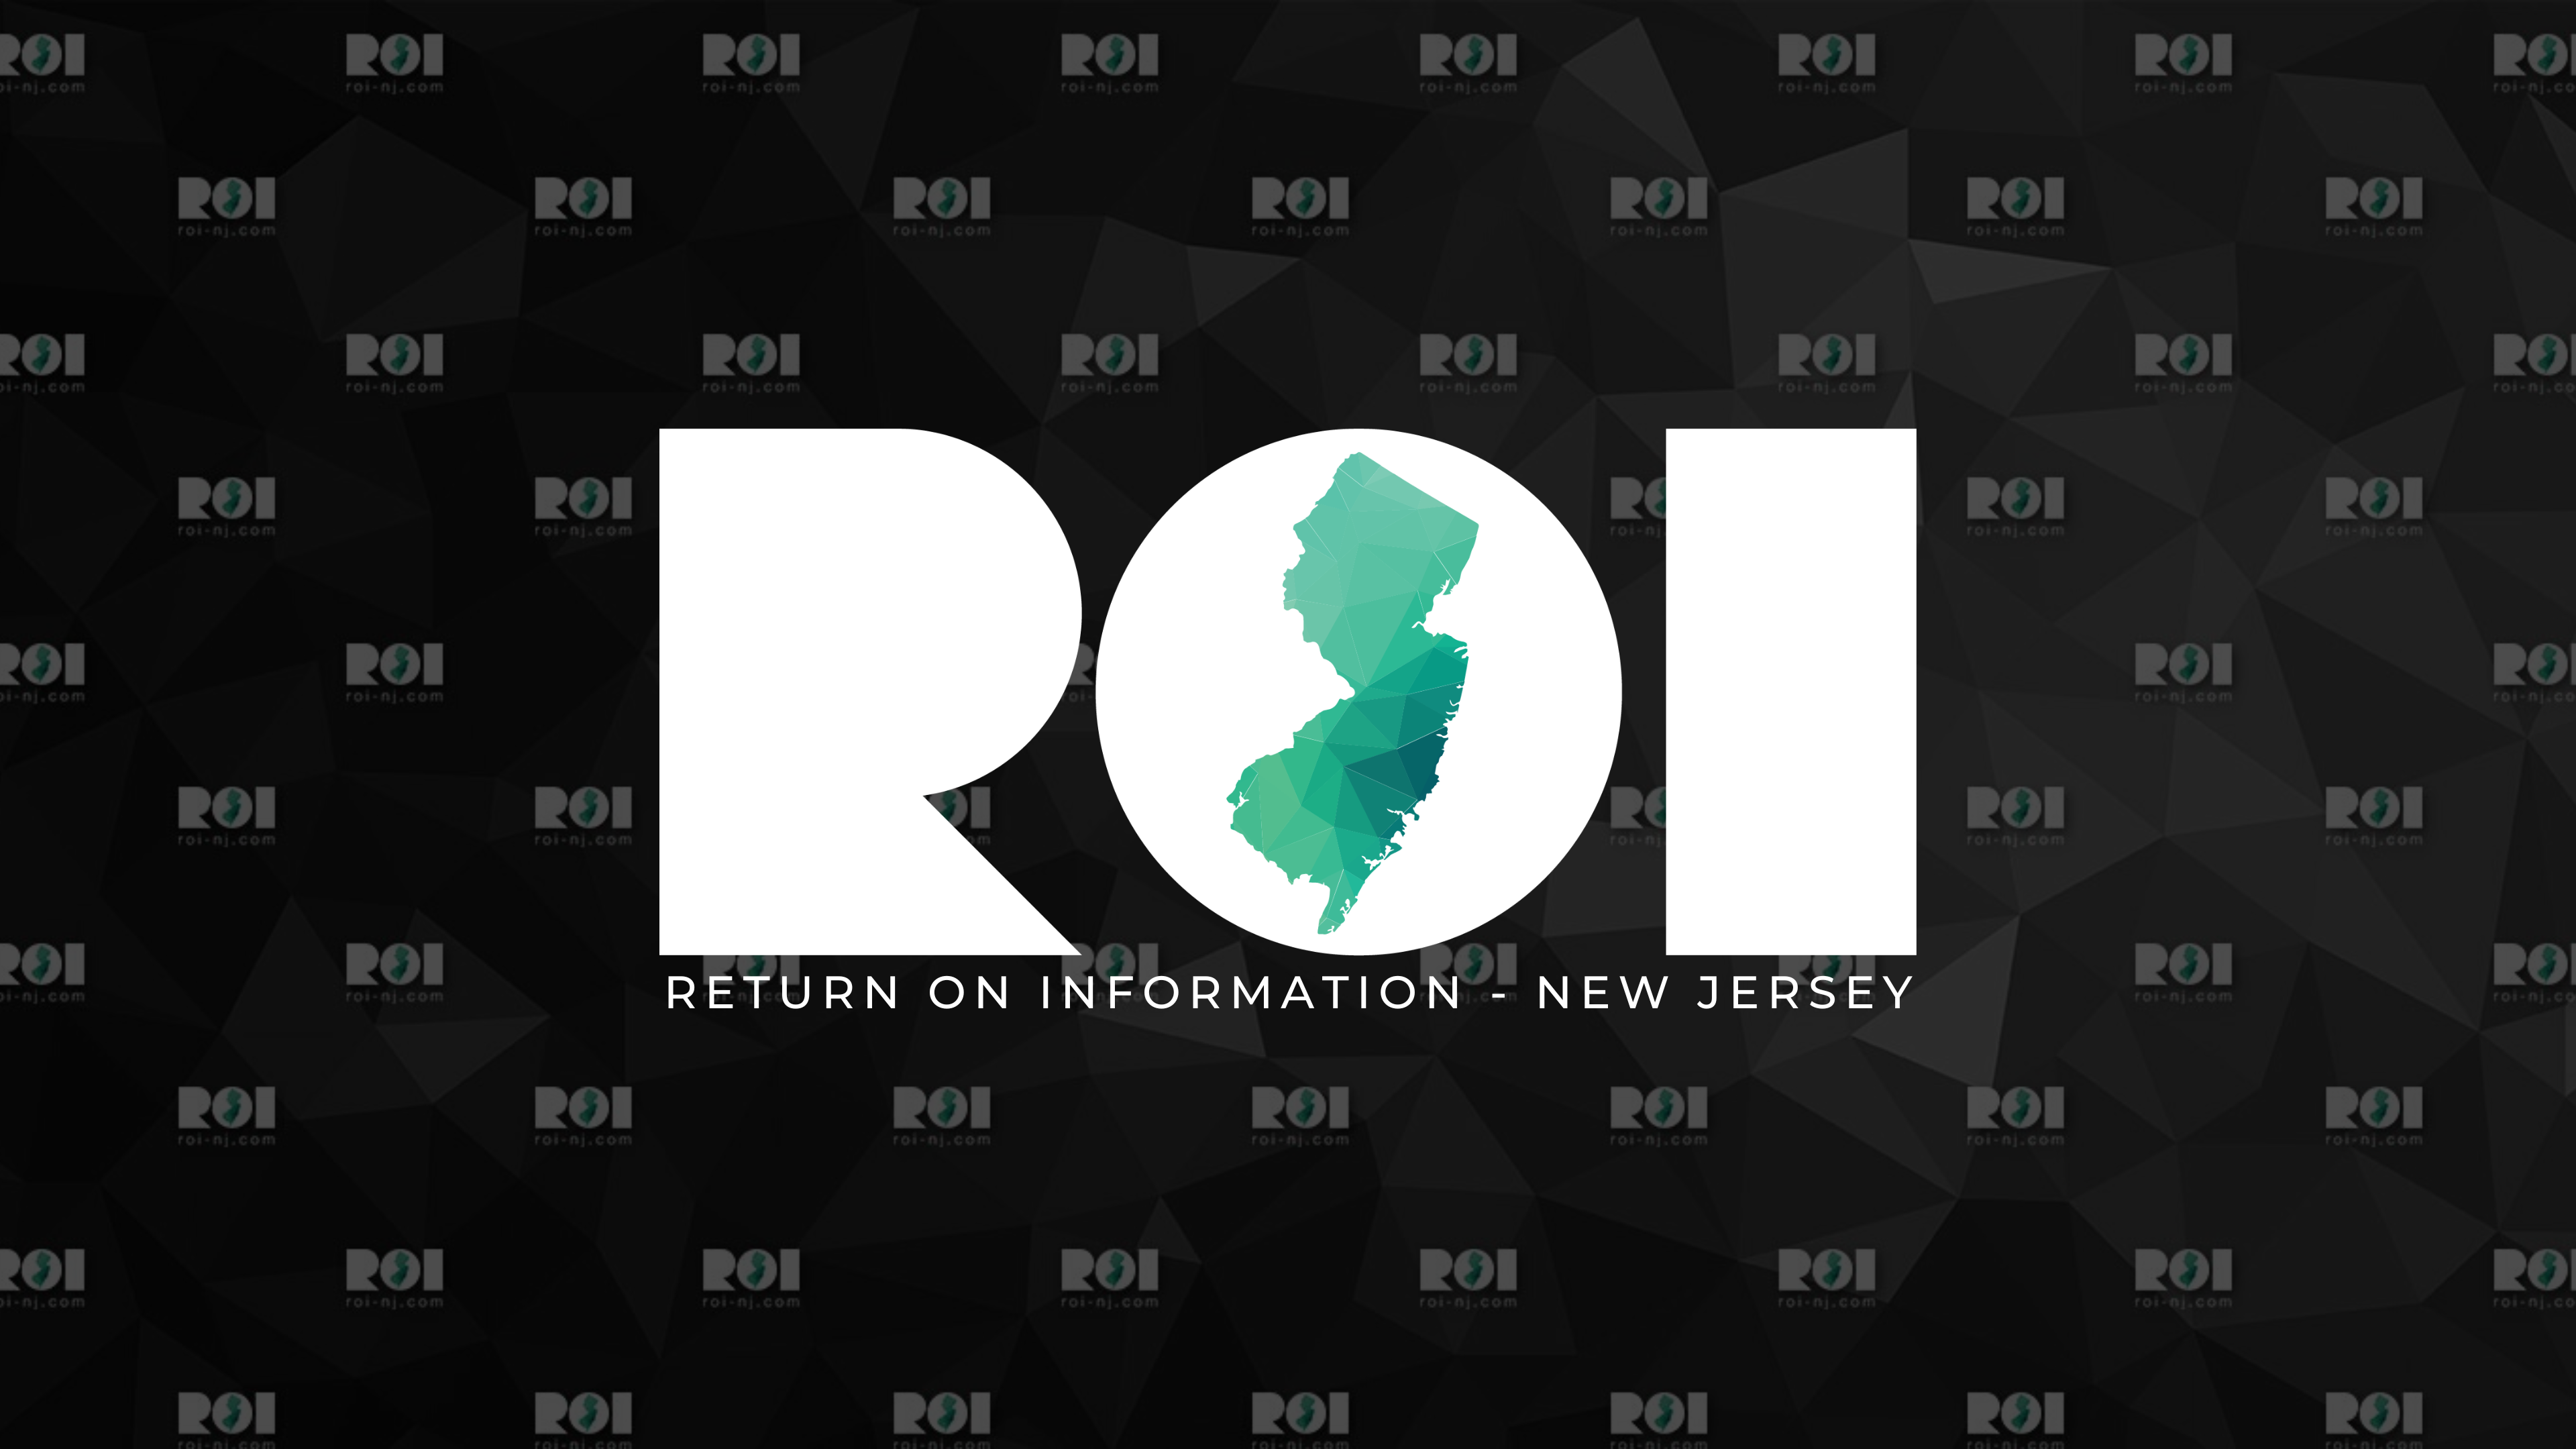 ROI NJ Website imagery